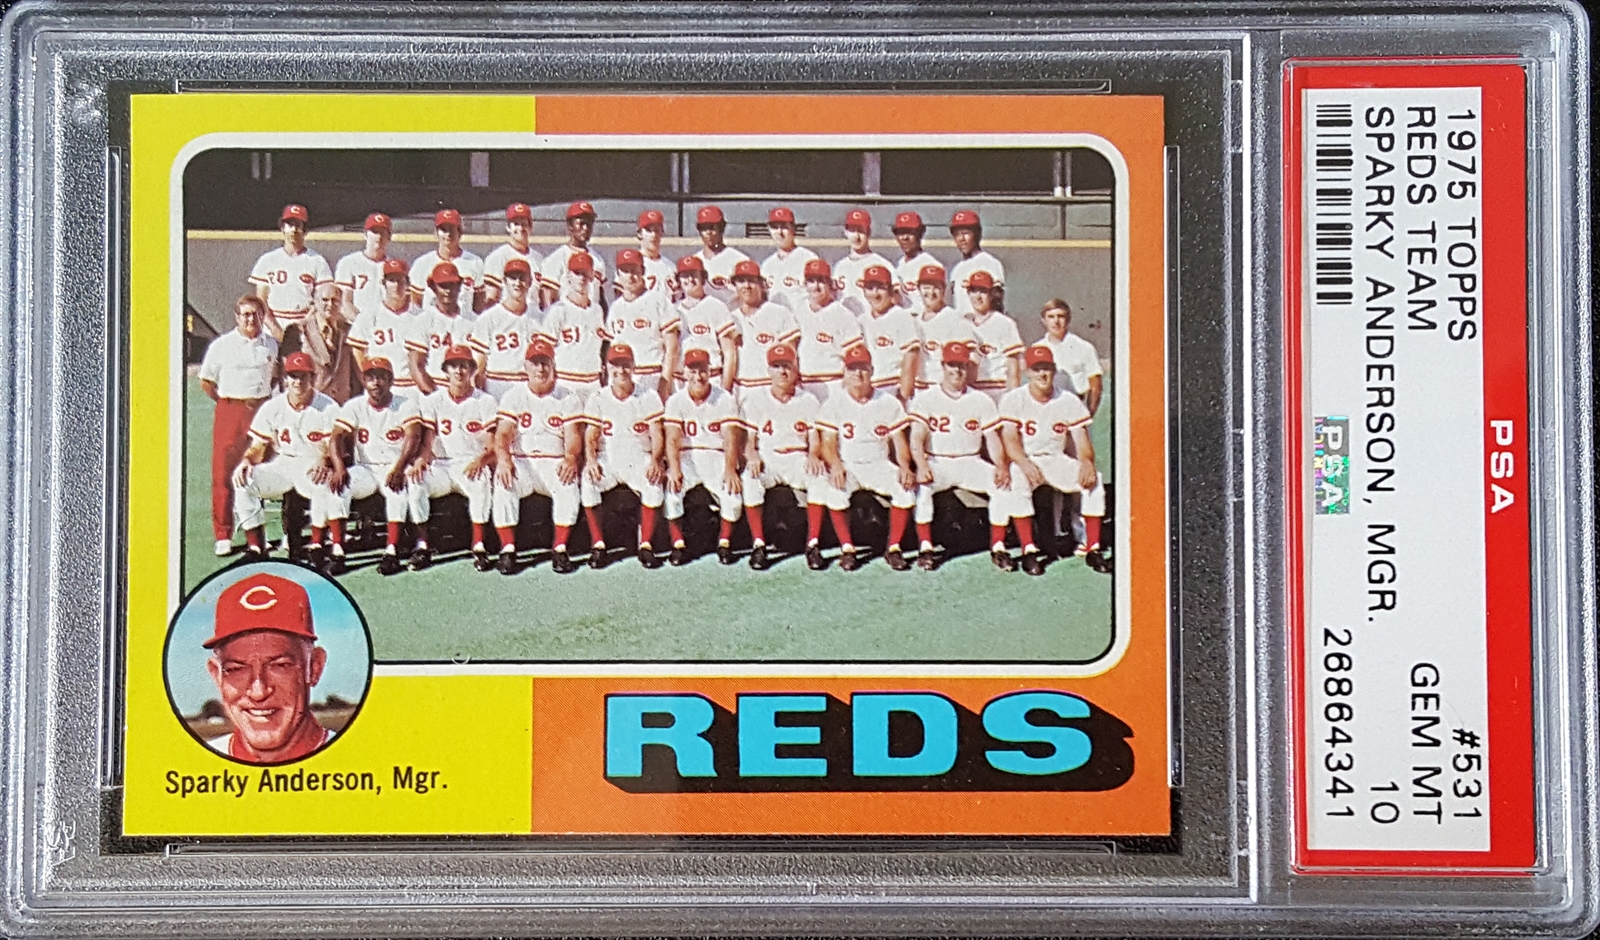 Baseball - 1956-Present Topps Cincinnati Reds Team Cards: mcholke Reds Team  Set Image Gallery